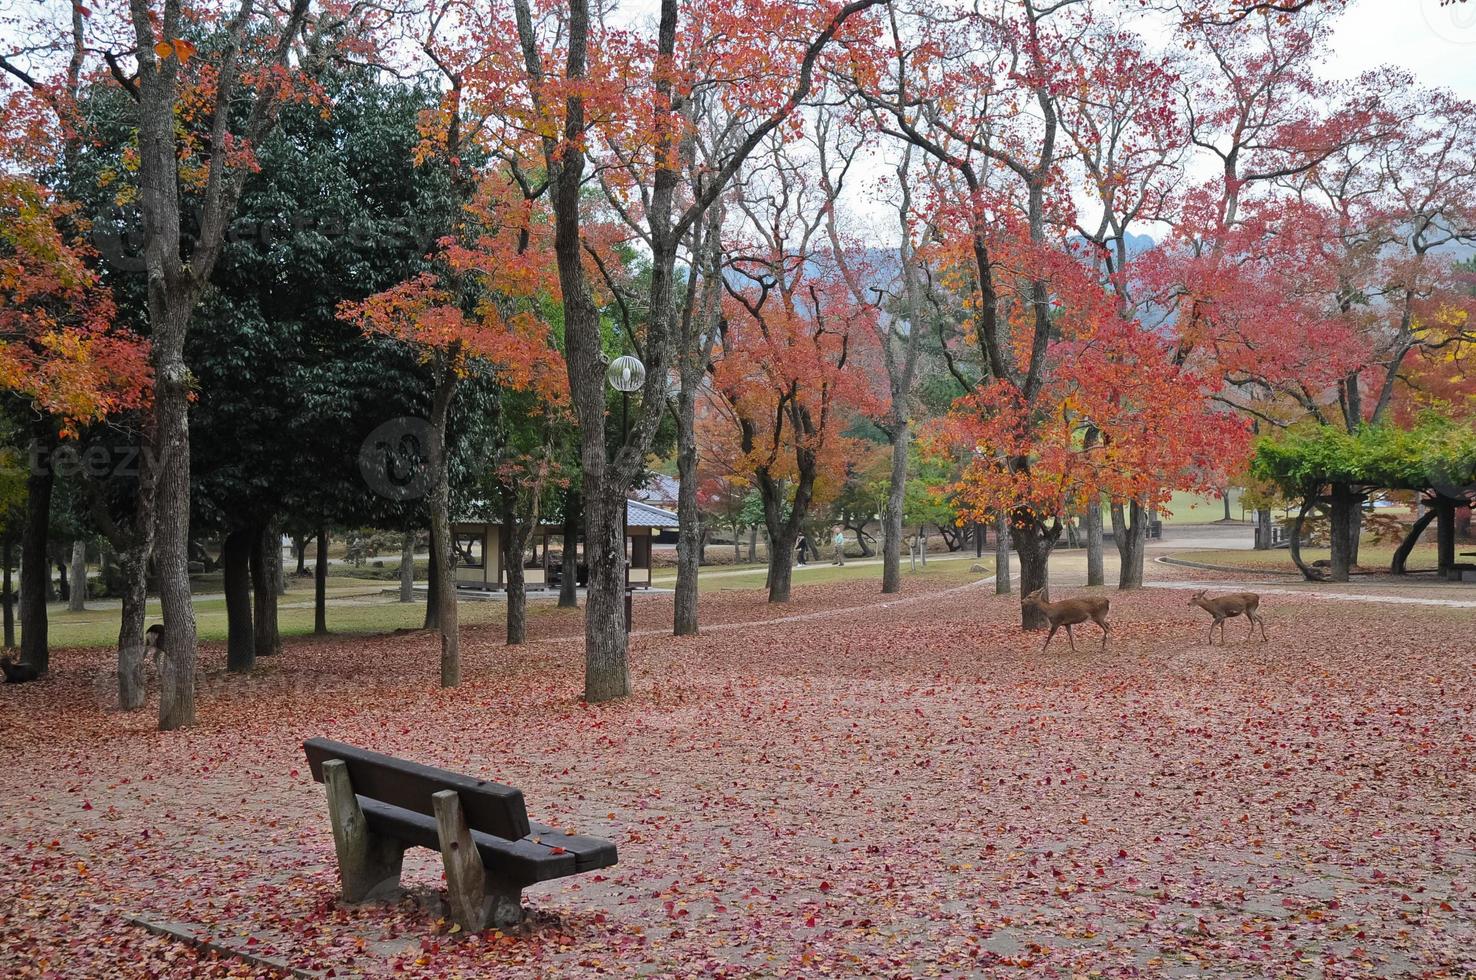 Lonely wooden bench in Japanese Autumn garden photo